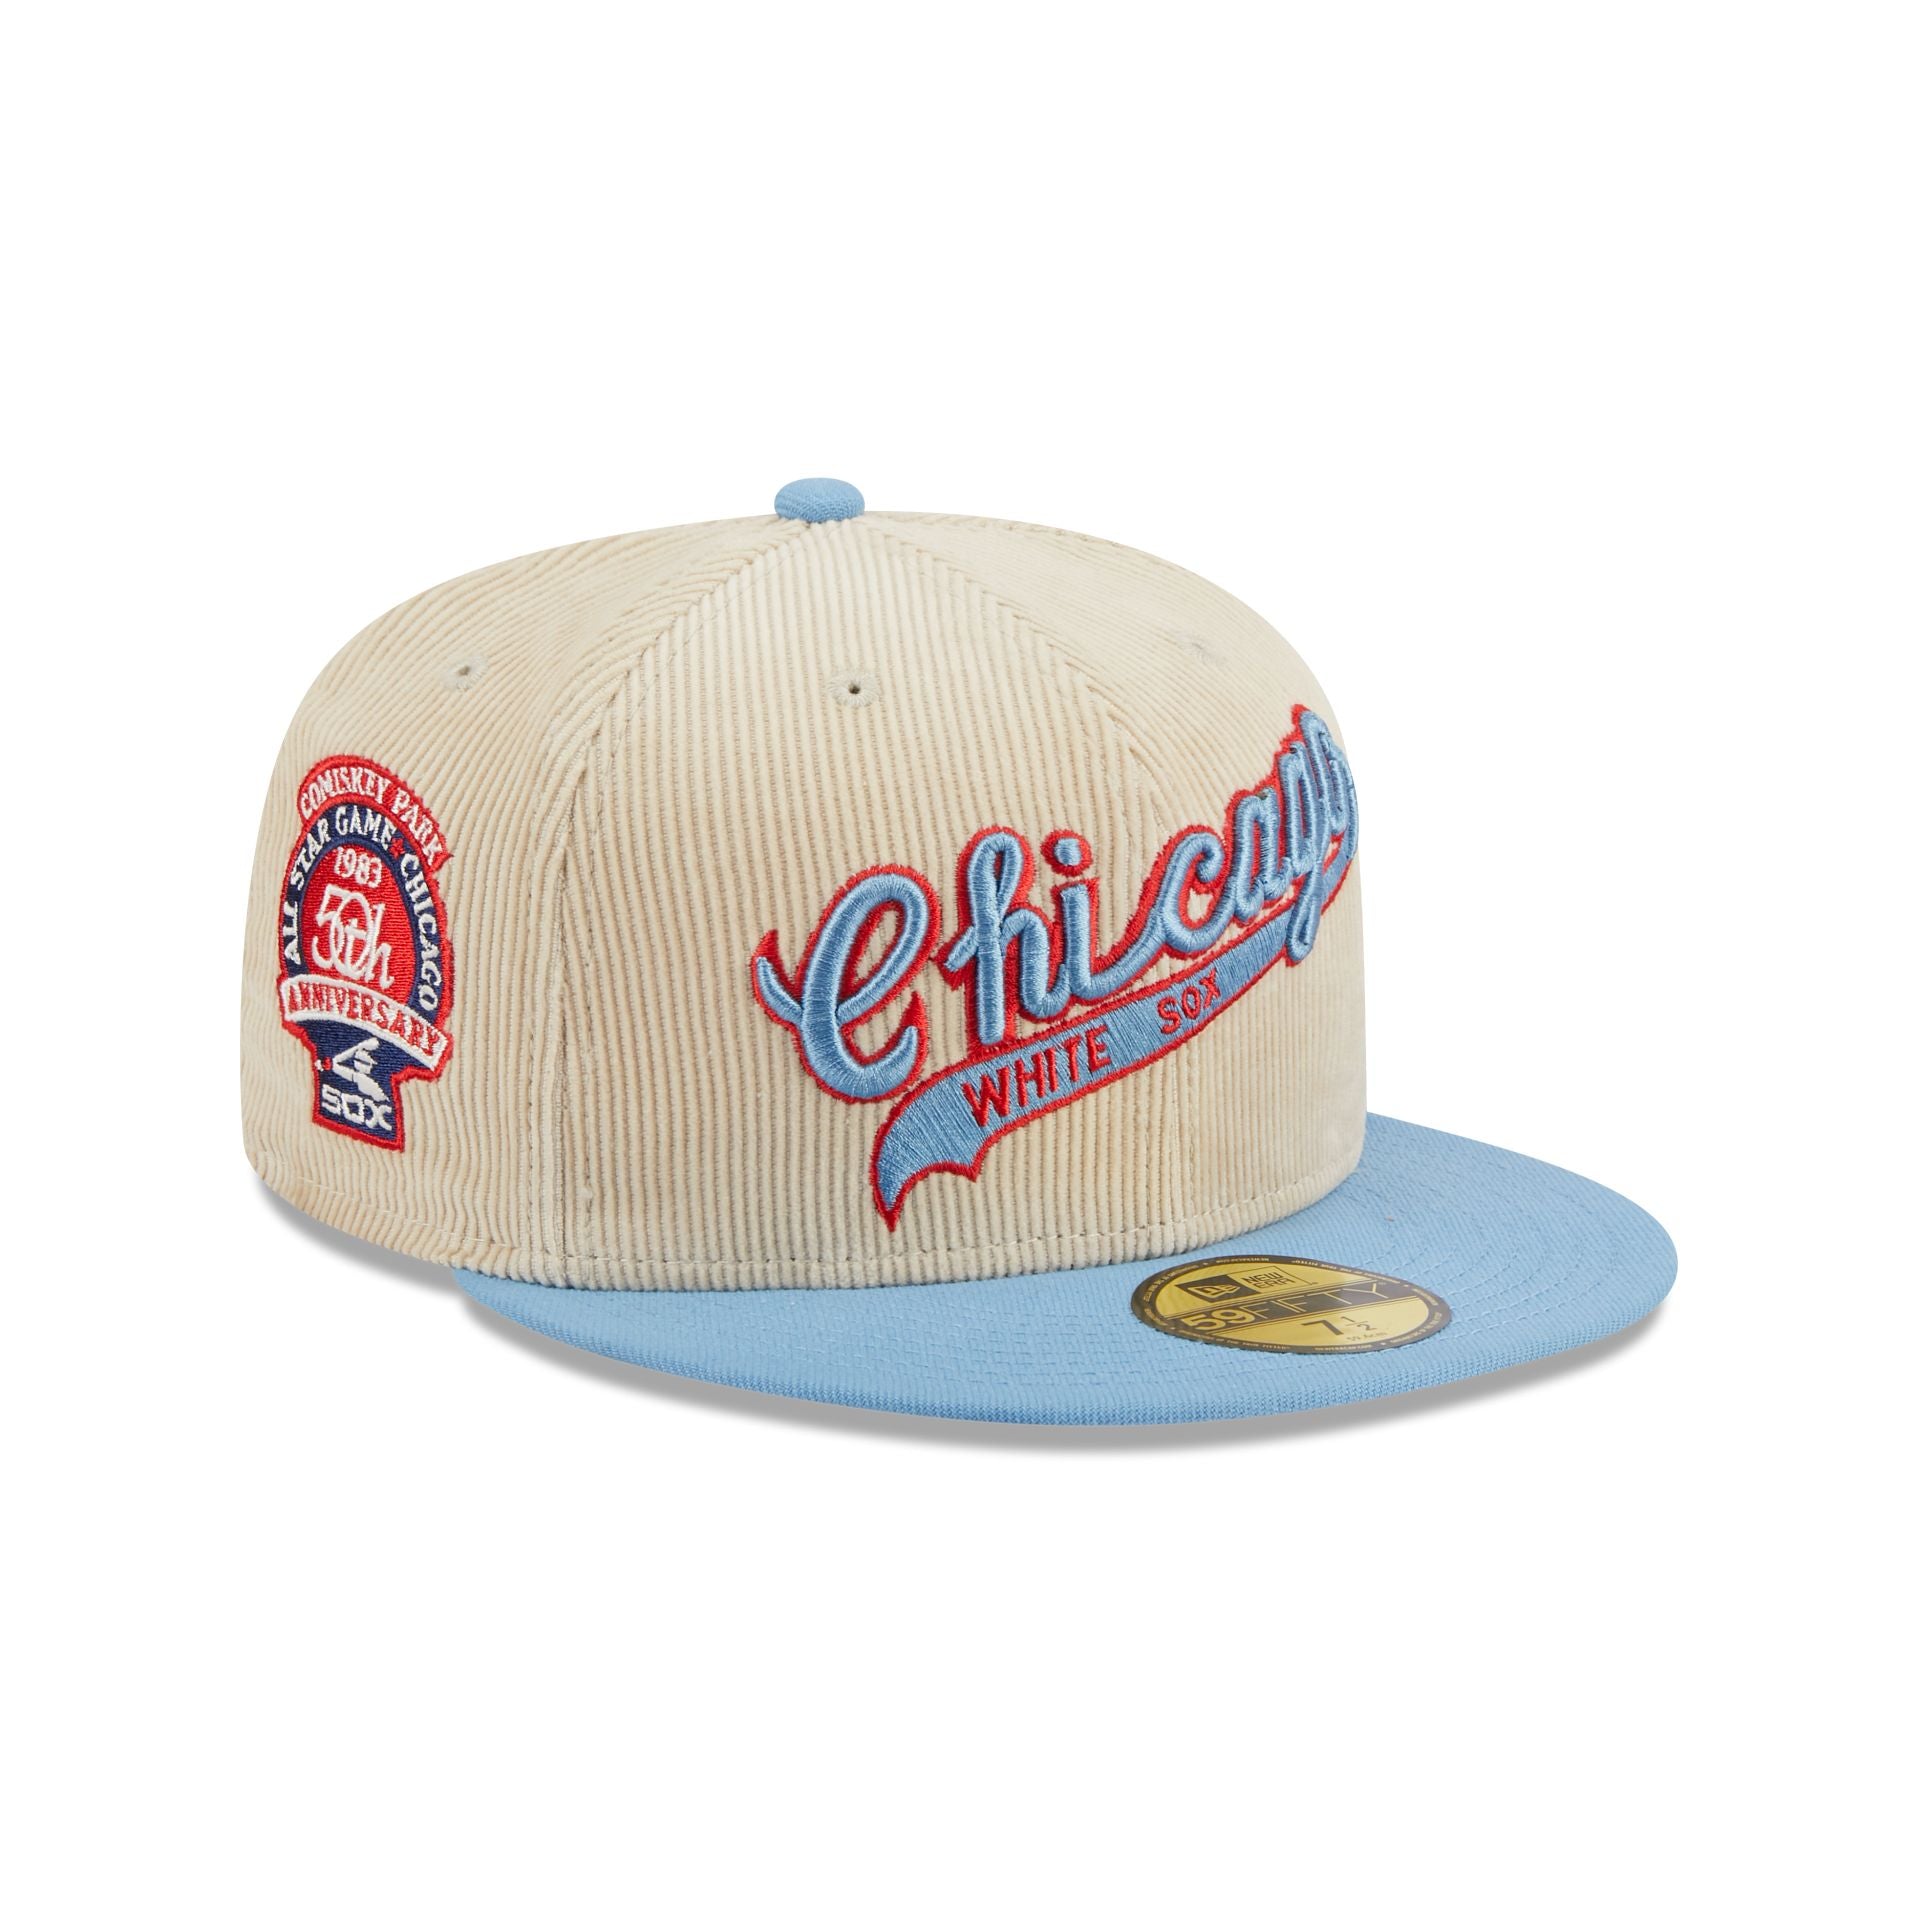 Men's St. Louis City SC New Era White/Pink Retro Title 9FIFTY Snapback Hat